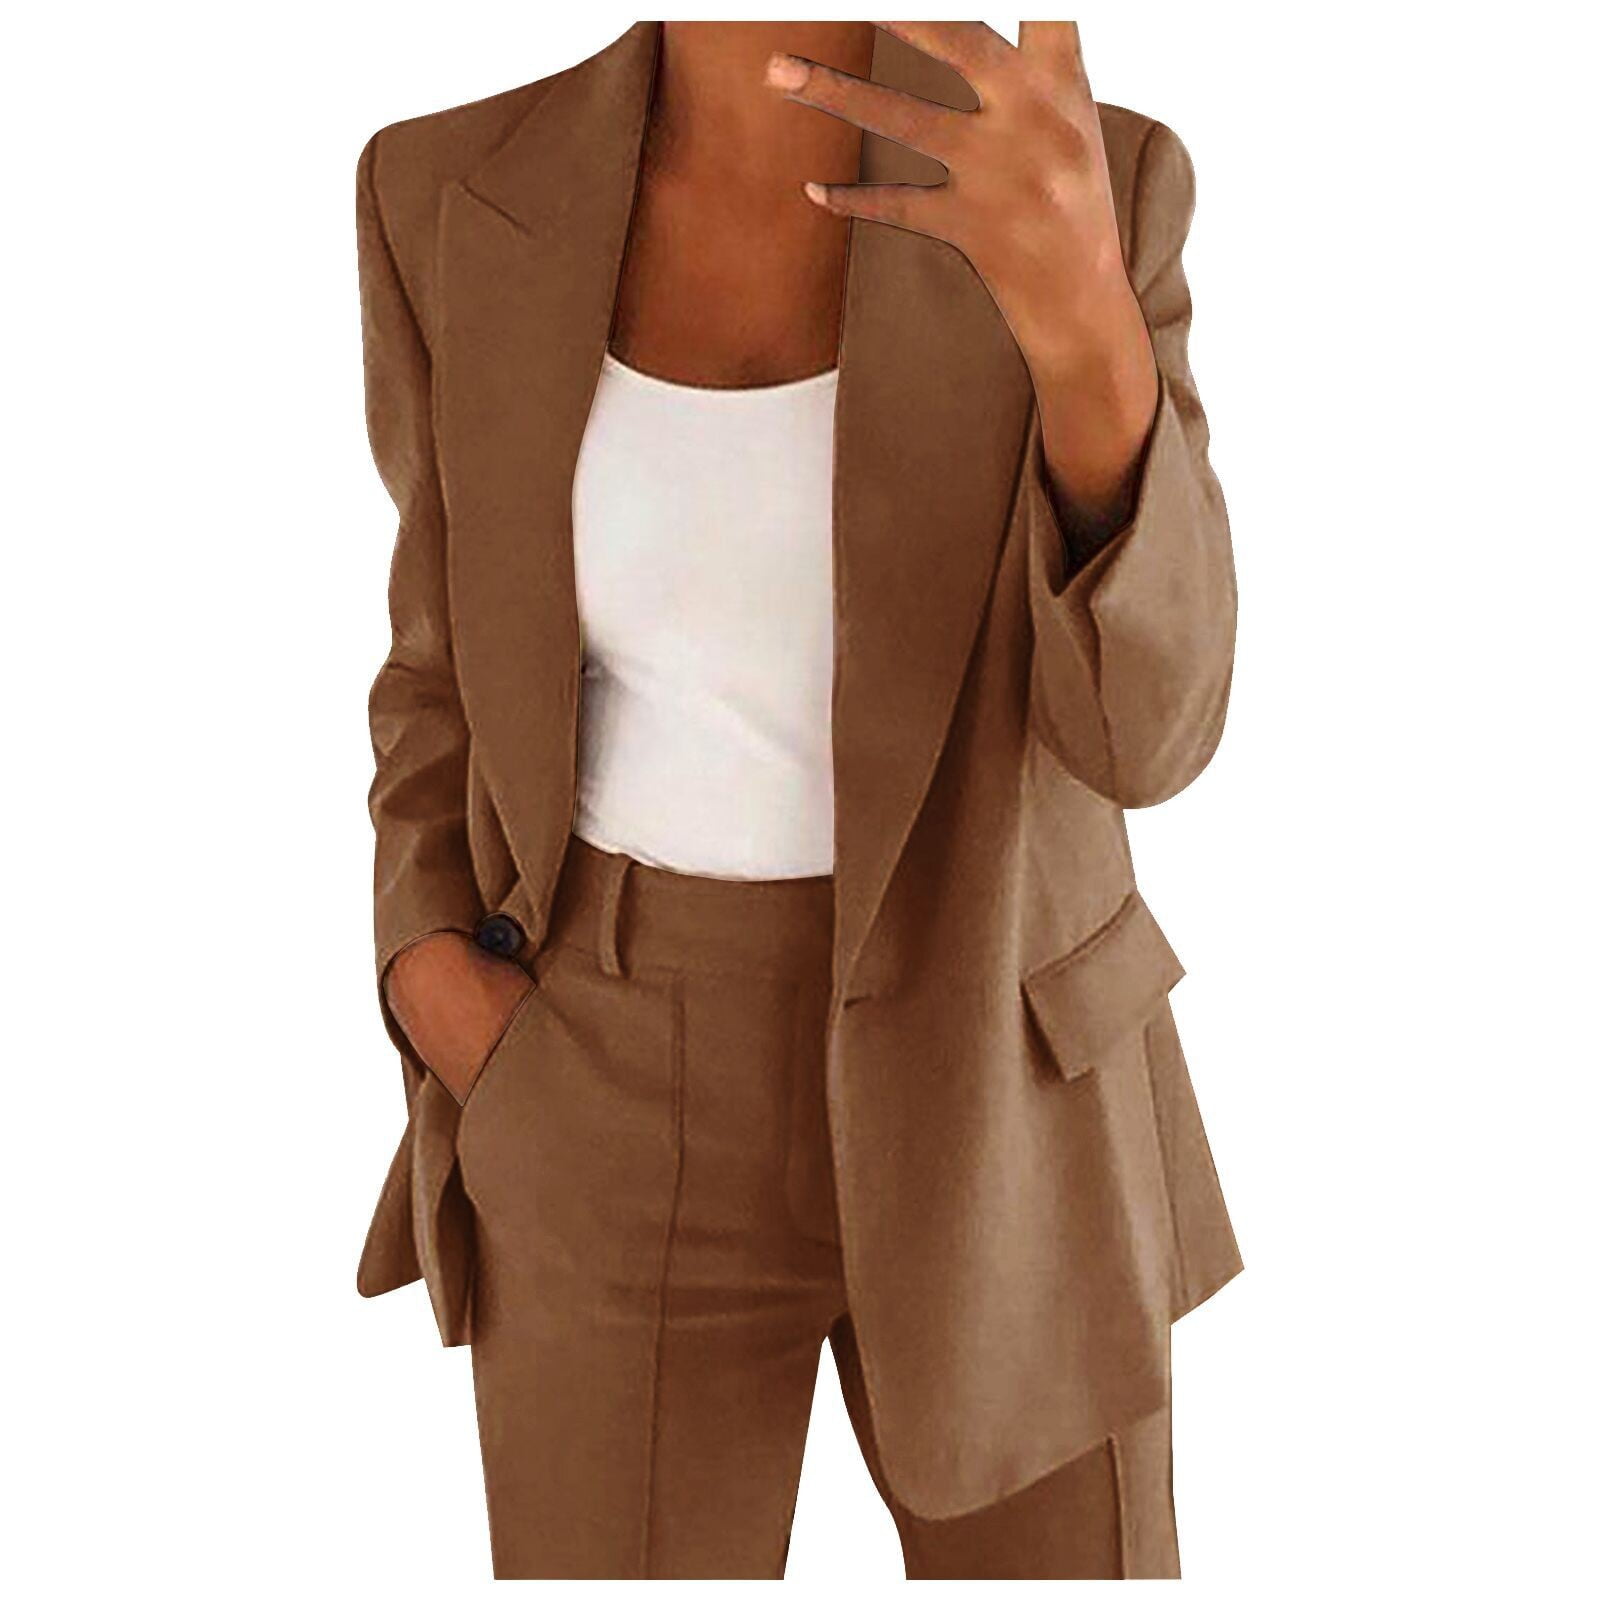 Olyvenn Deals Women Solid Long Sleeve Office Coat Cardigans